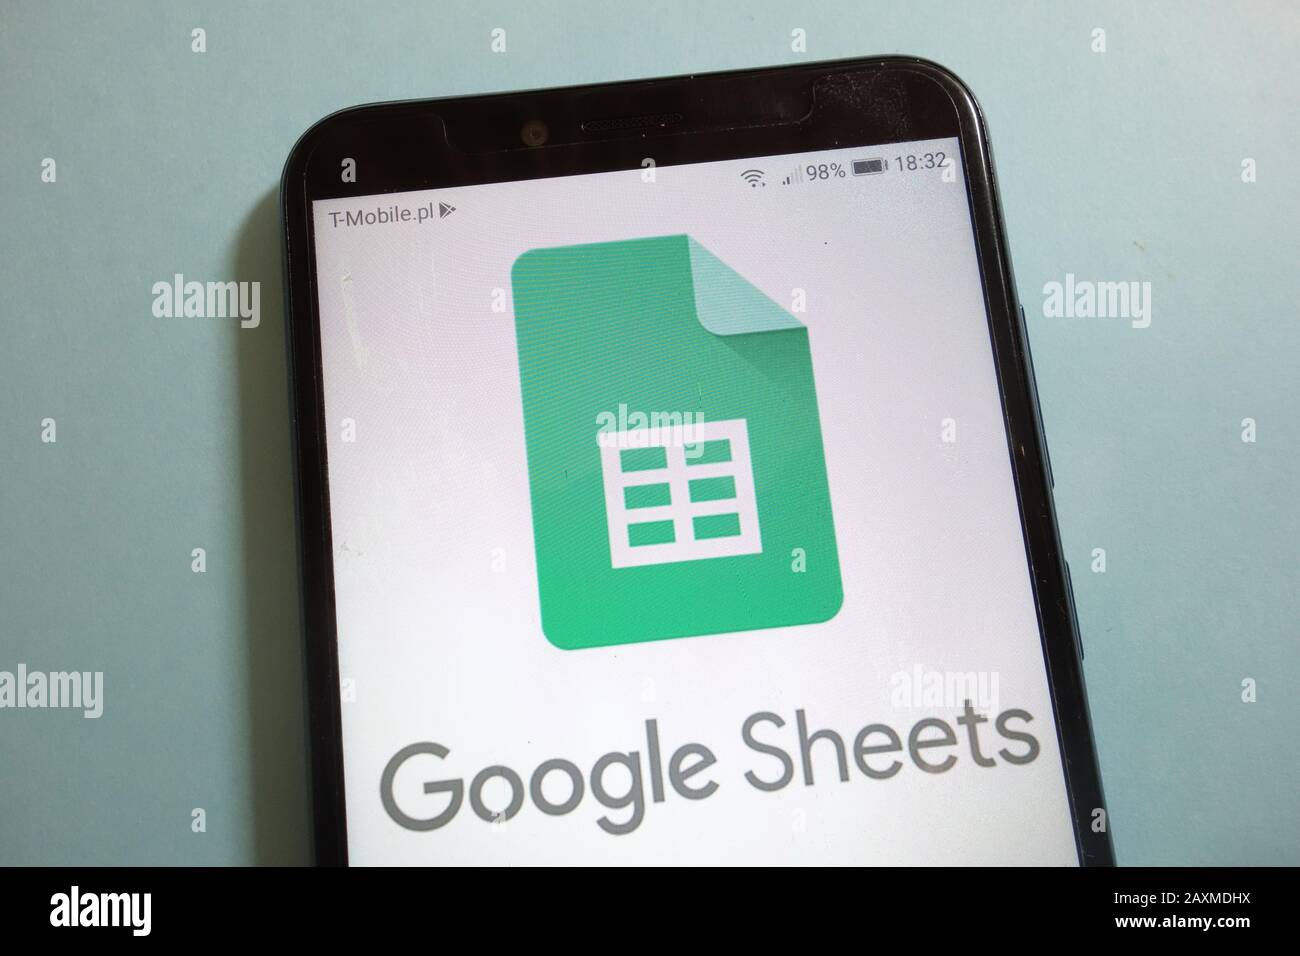 Google Sheets logo on smartphone Stock Photo